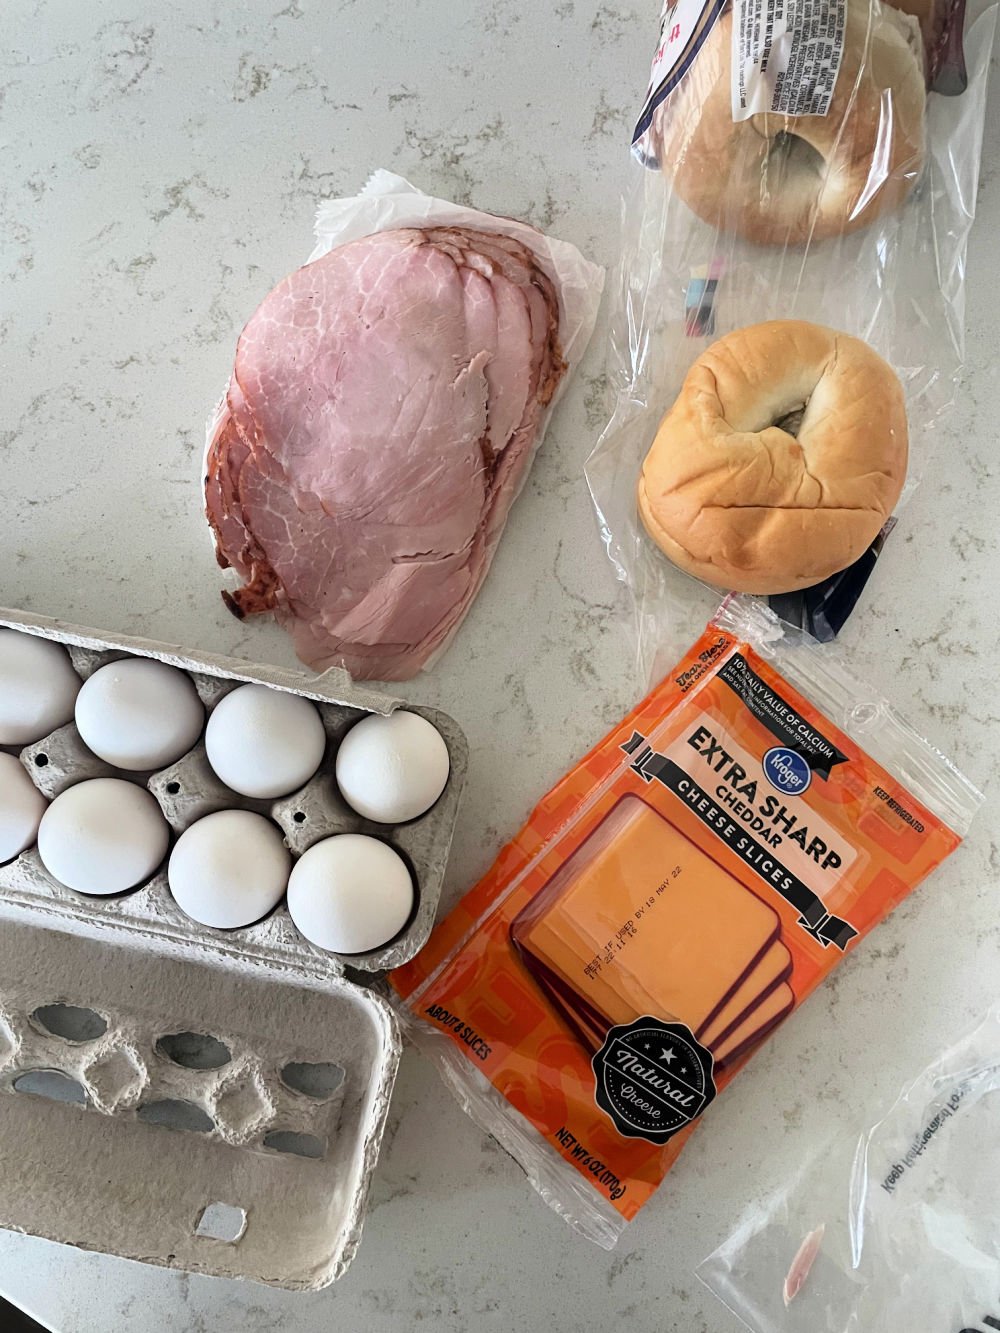 Ingredients for Bagel Breakfast Sandwiches